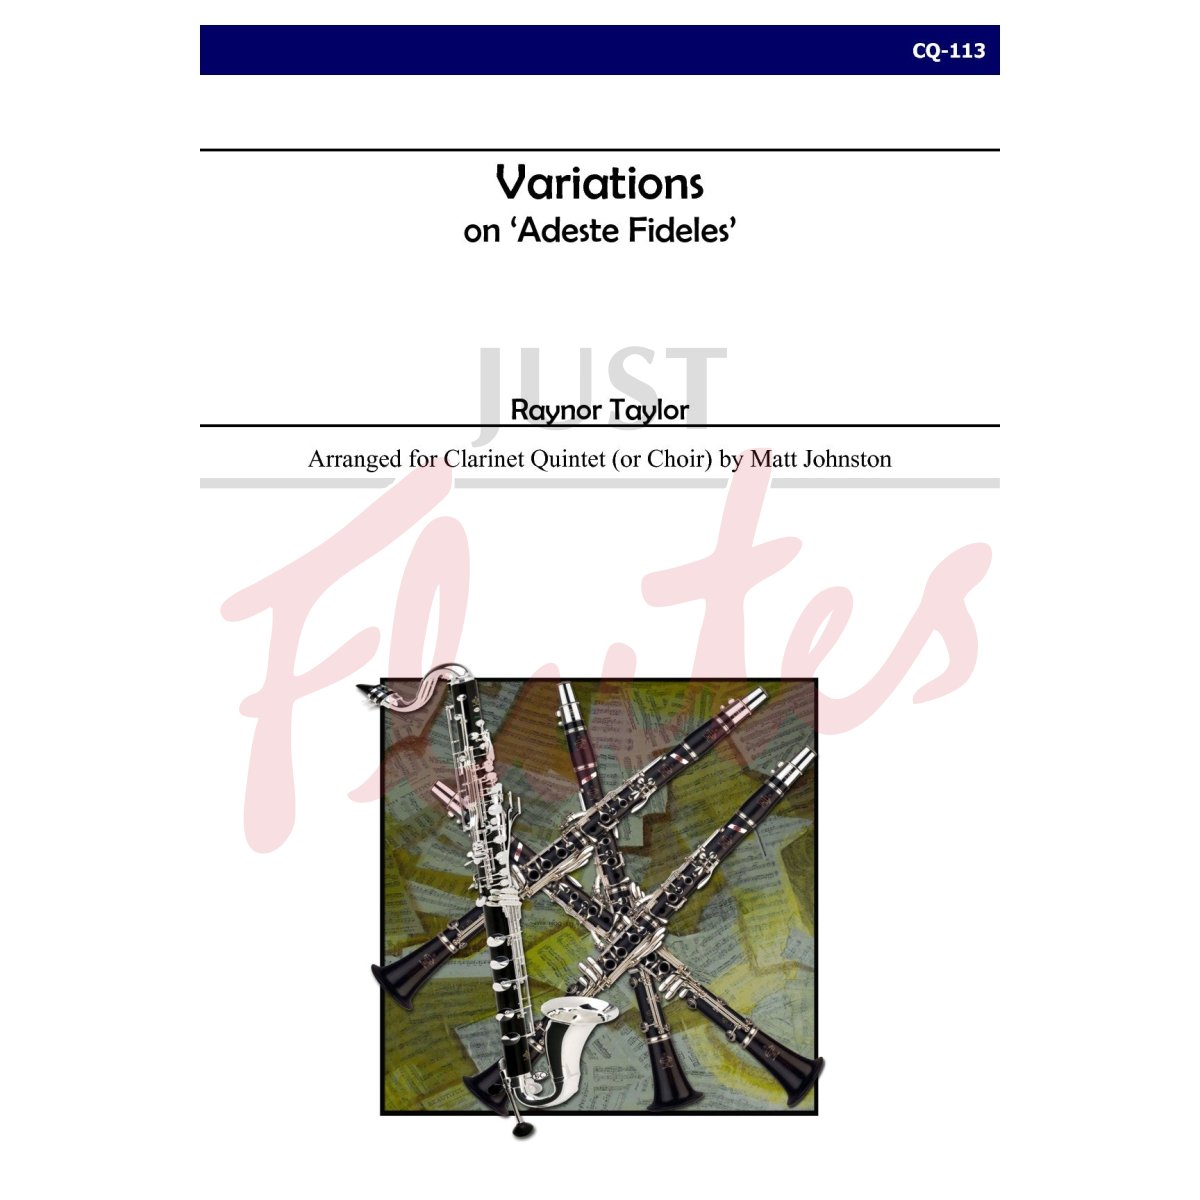 Variations on Adeste Fideles for Clarinet Quintet